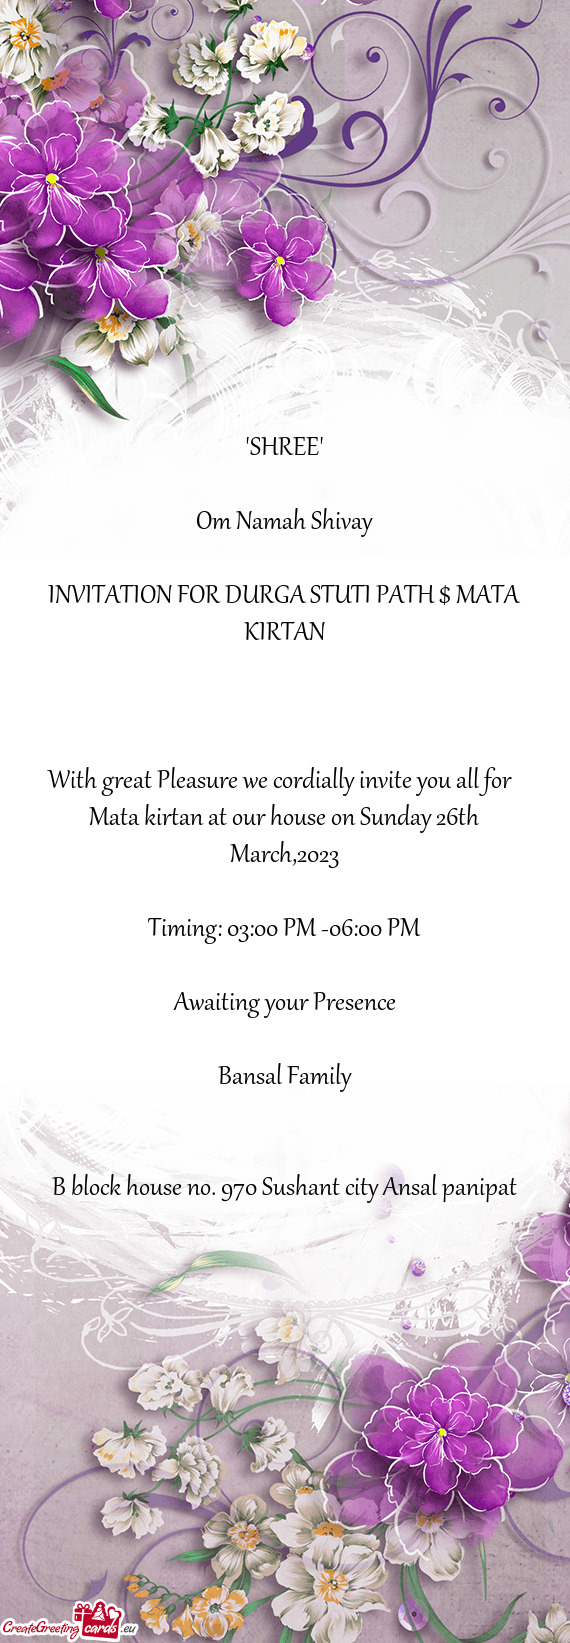 INVITATION FOR DURGA STUTI PATH $ MATA KIRTAN